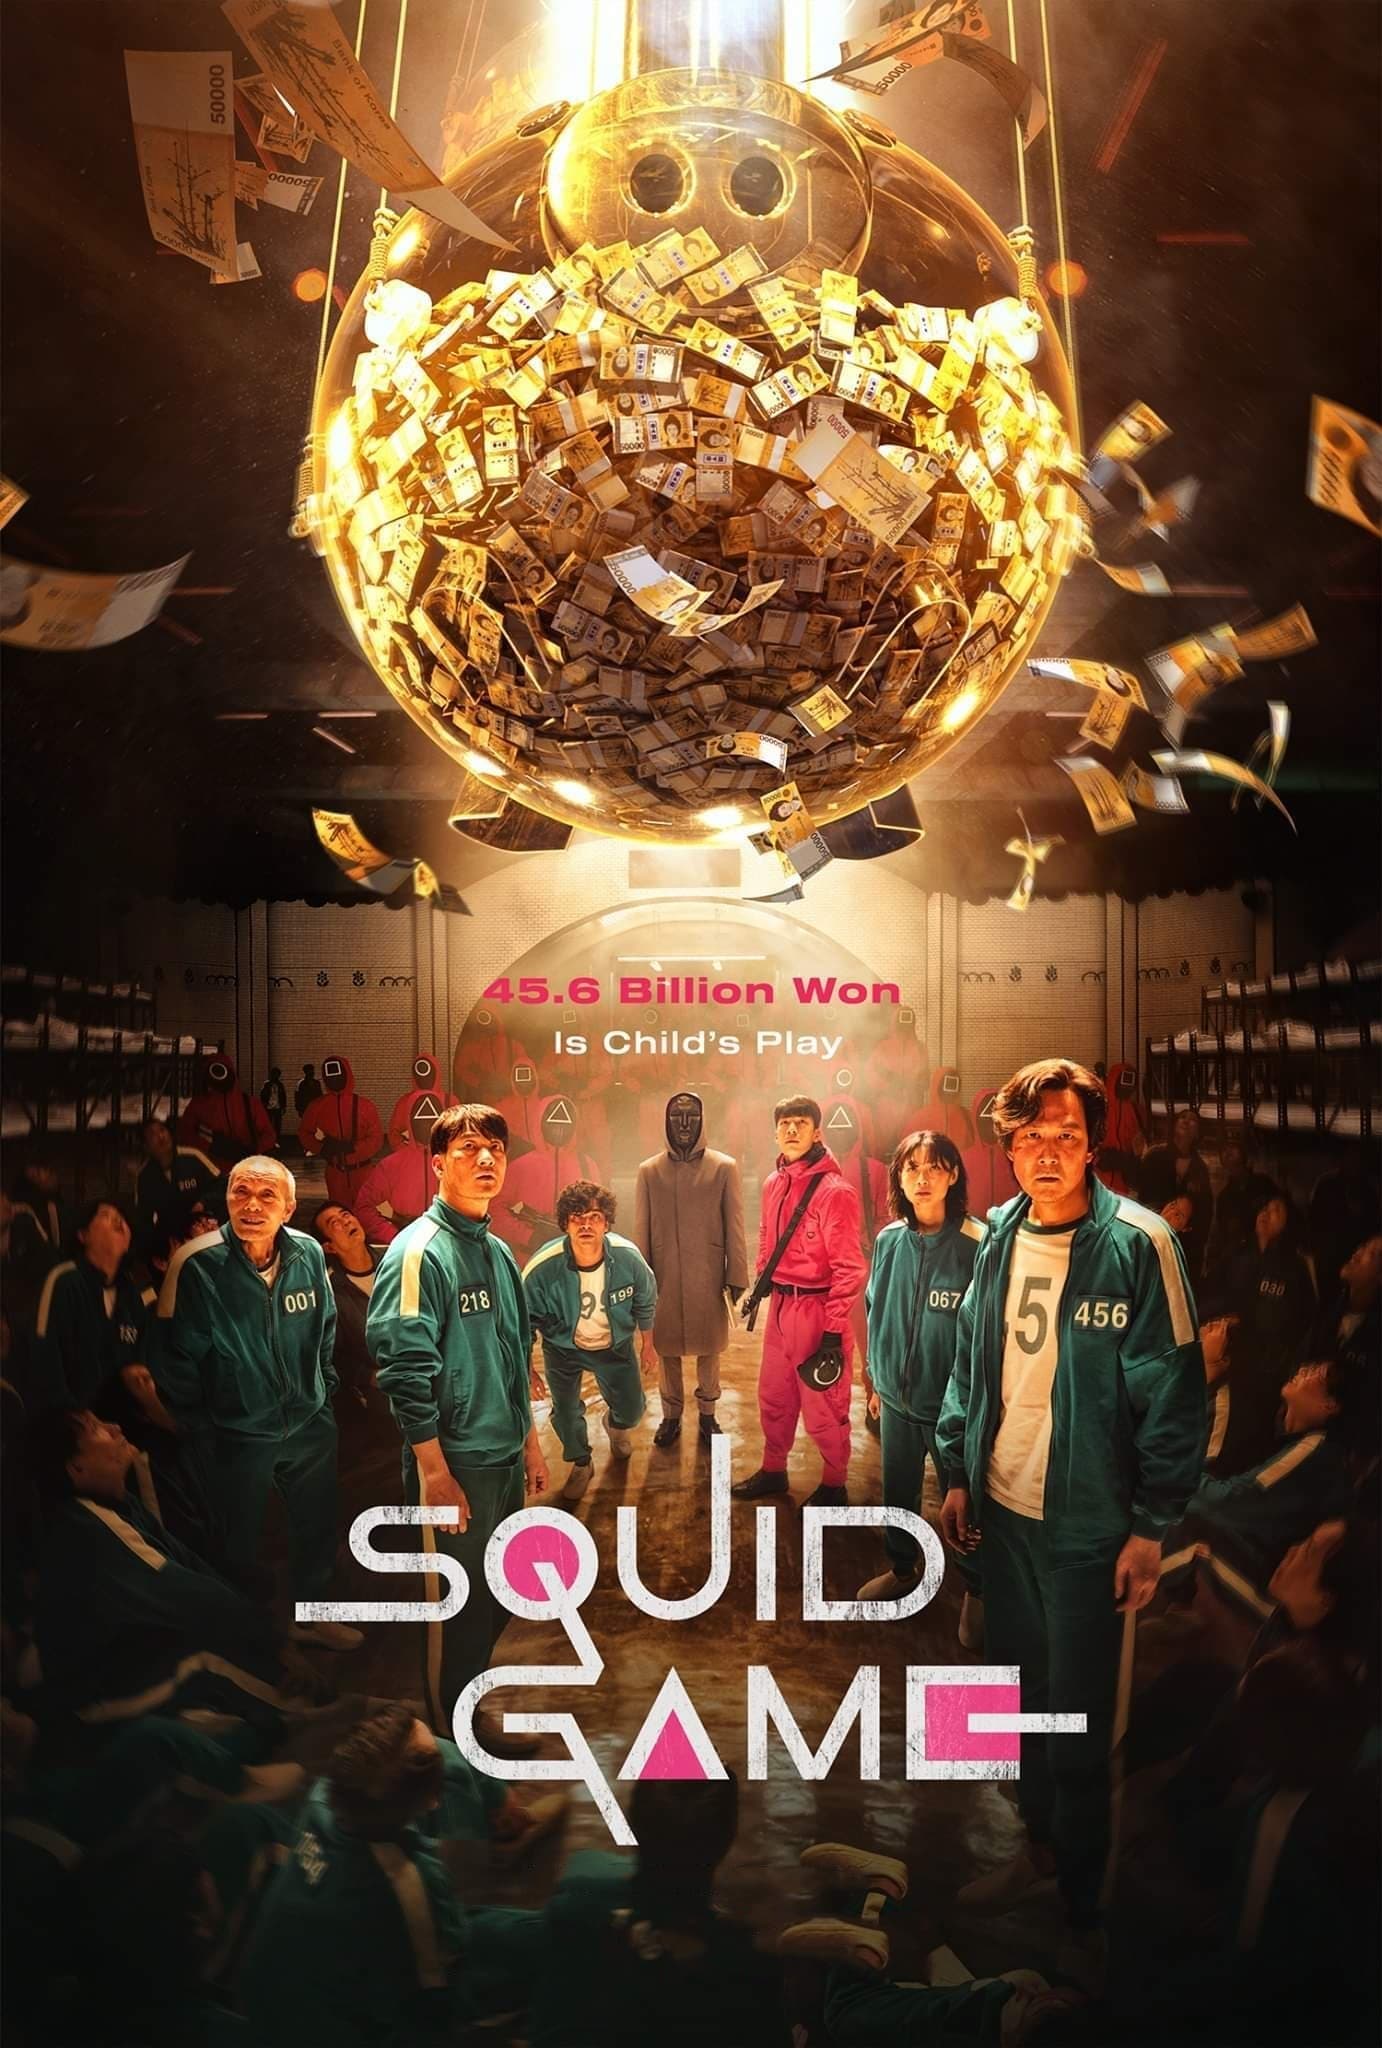 Squid Game (2021) Hindi Dubbed Season 1